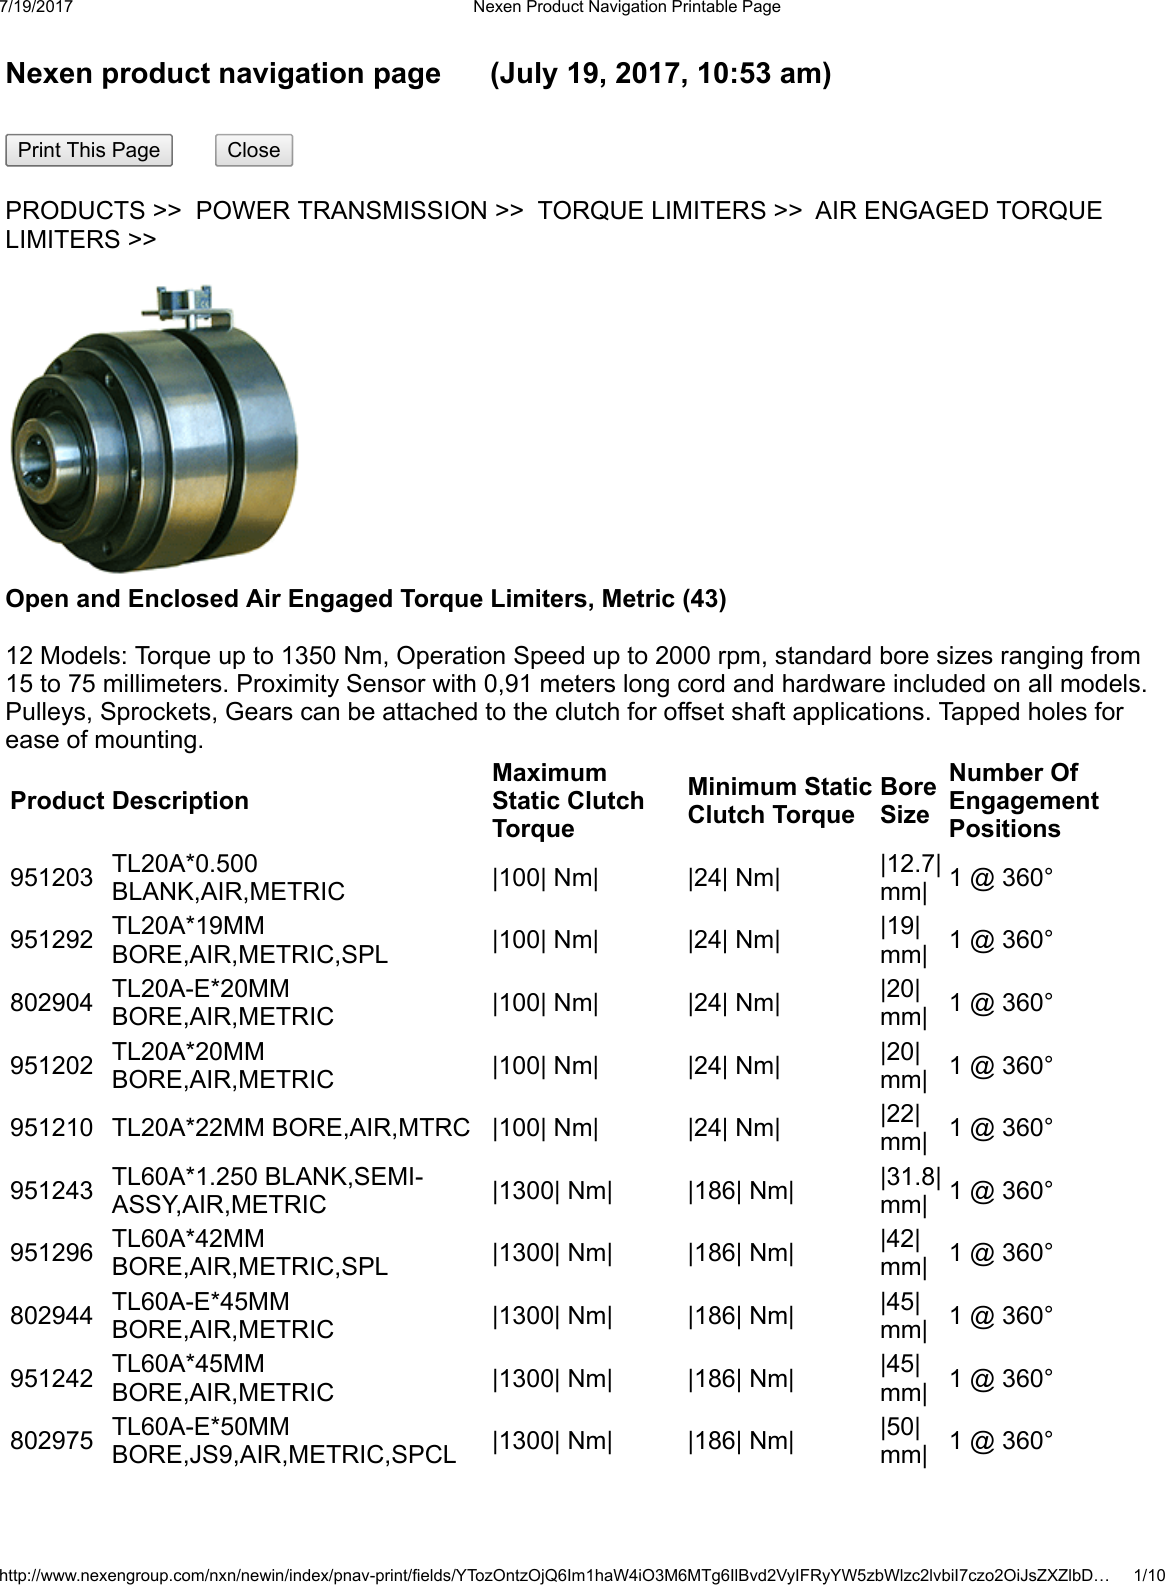 Enclosed Air Engaged Torque Limiter Nexen 802968 